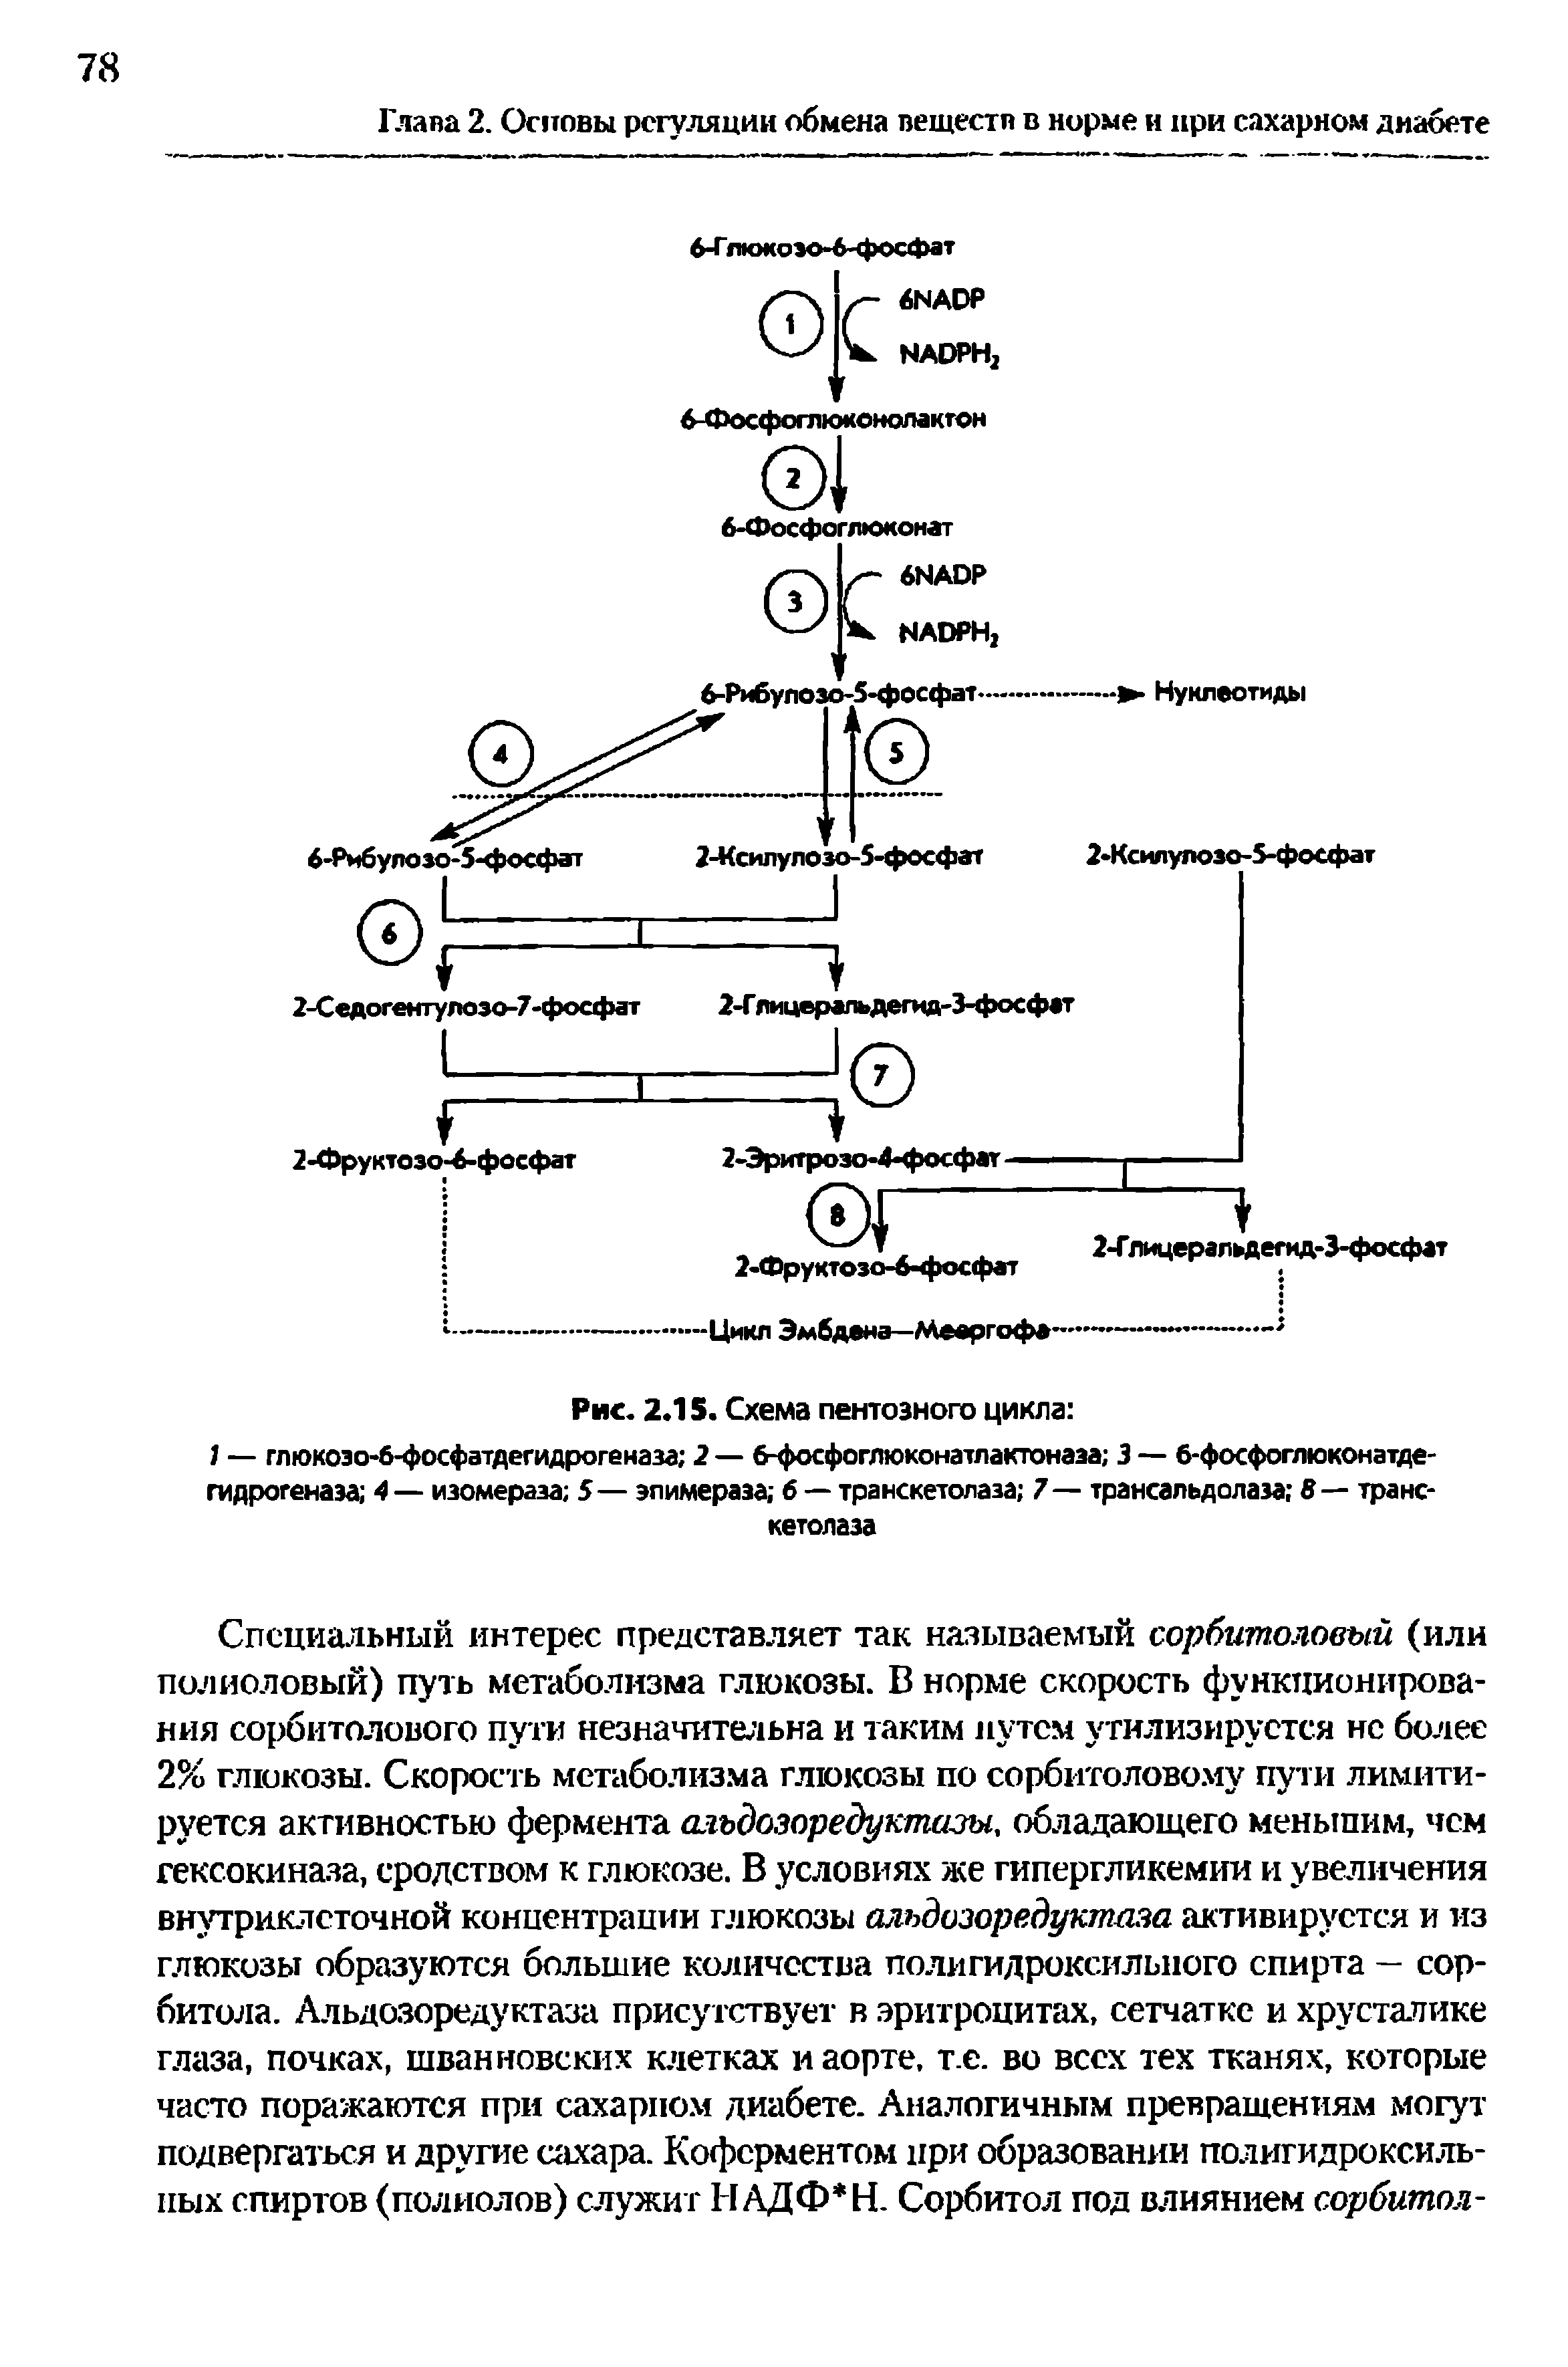 Рис. 2.15. Схема пентозного цикла / — глюкоэо-6-фосфатдегидрогеназа 2 — 6-фосфоглюконатлактонааа 3 — 6-фосфотюконатде-гидрогенаэа 4— изомераза 5— эпимераза 6 — транскетолаза 7— трансальдолаза В — транскетолаза...